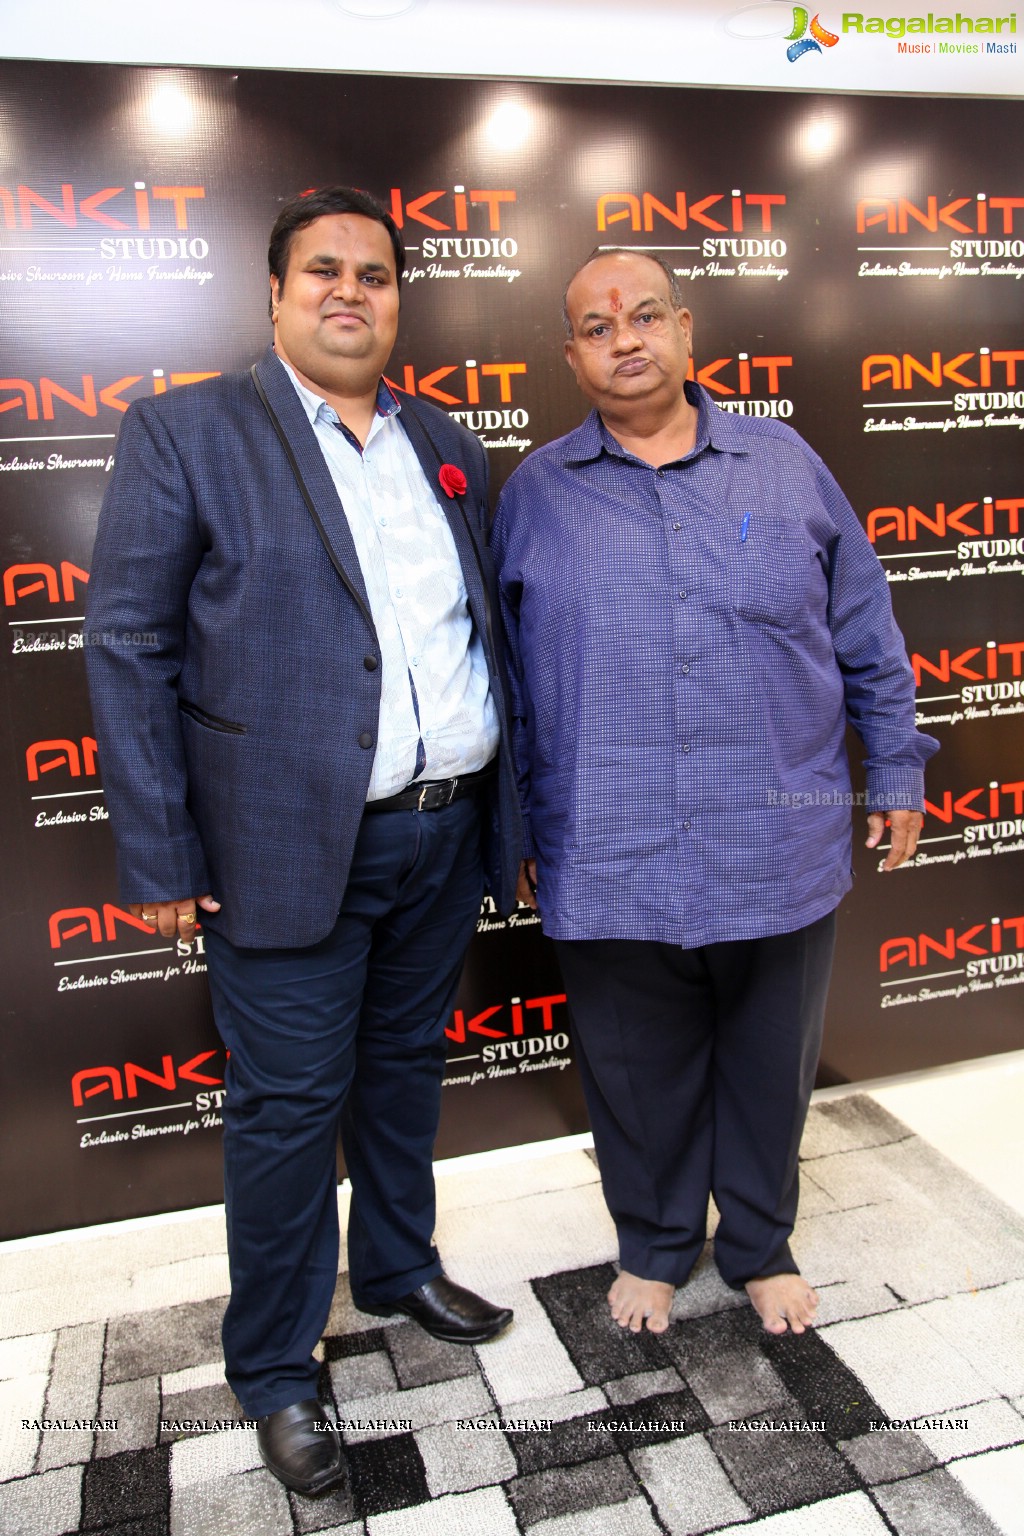 Ankit Studio - The Furnishing World Launch at Abids, Hyderabad